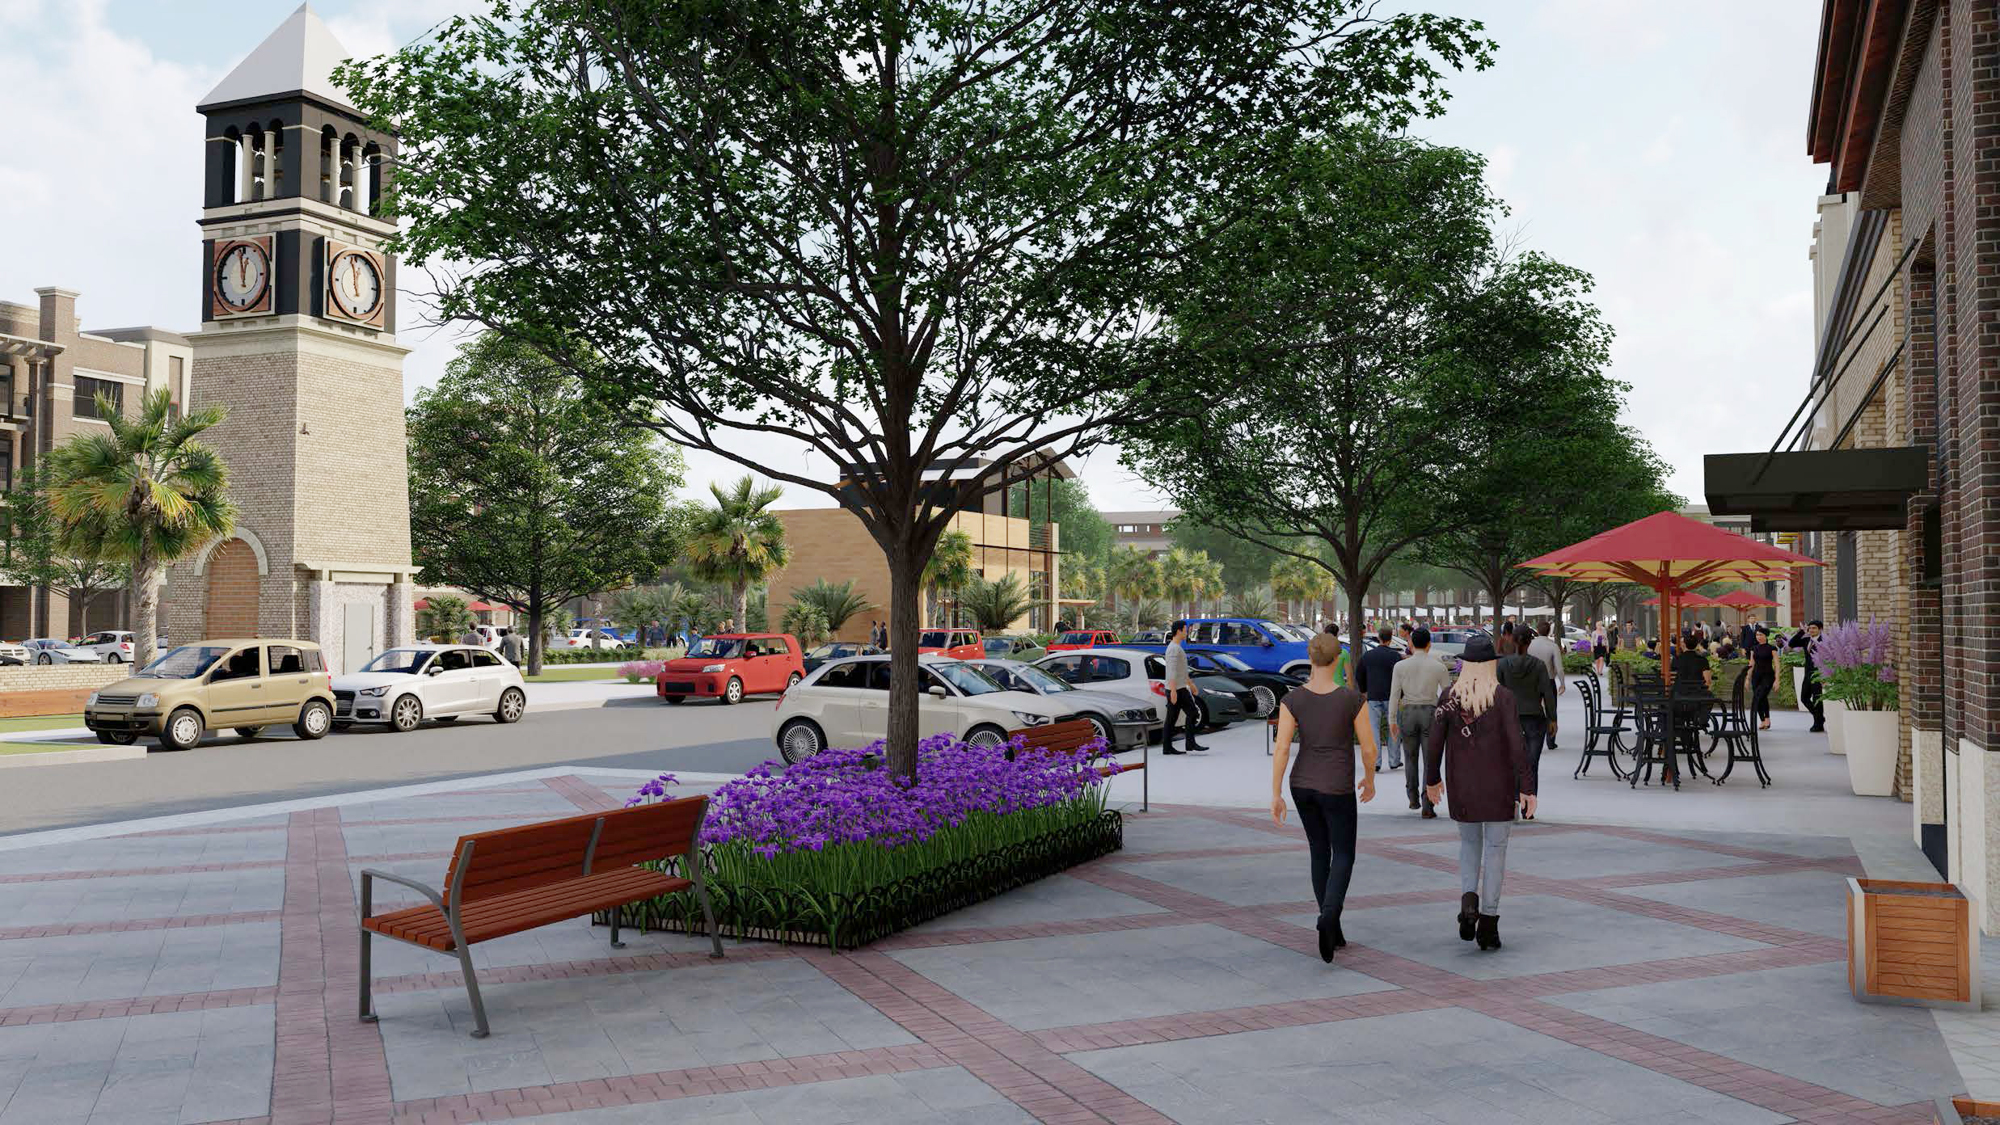 Highland Row plans “blocks of dense, walkable and mixed-use real estate.”